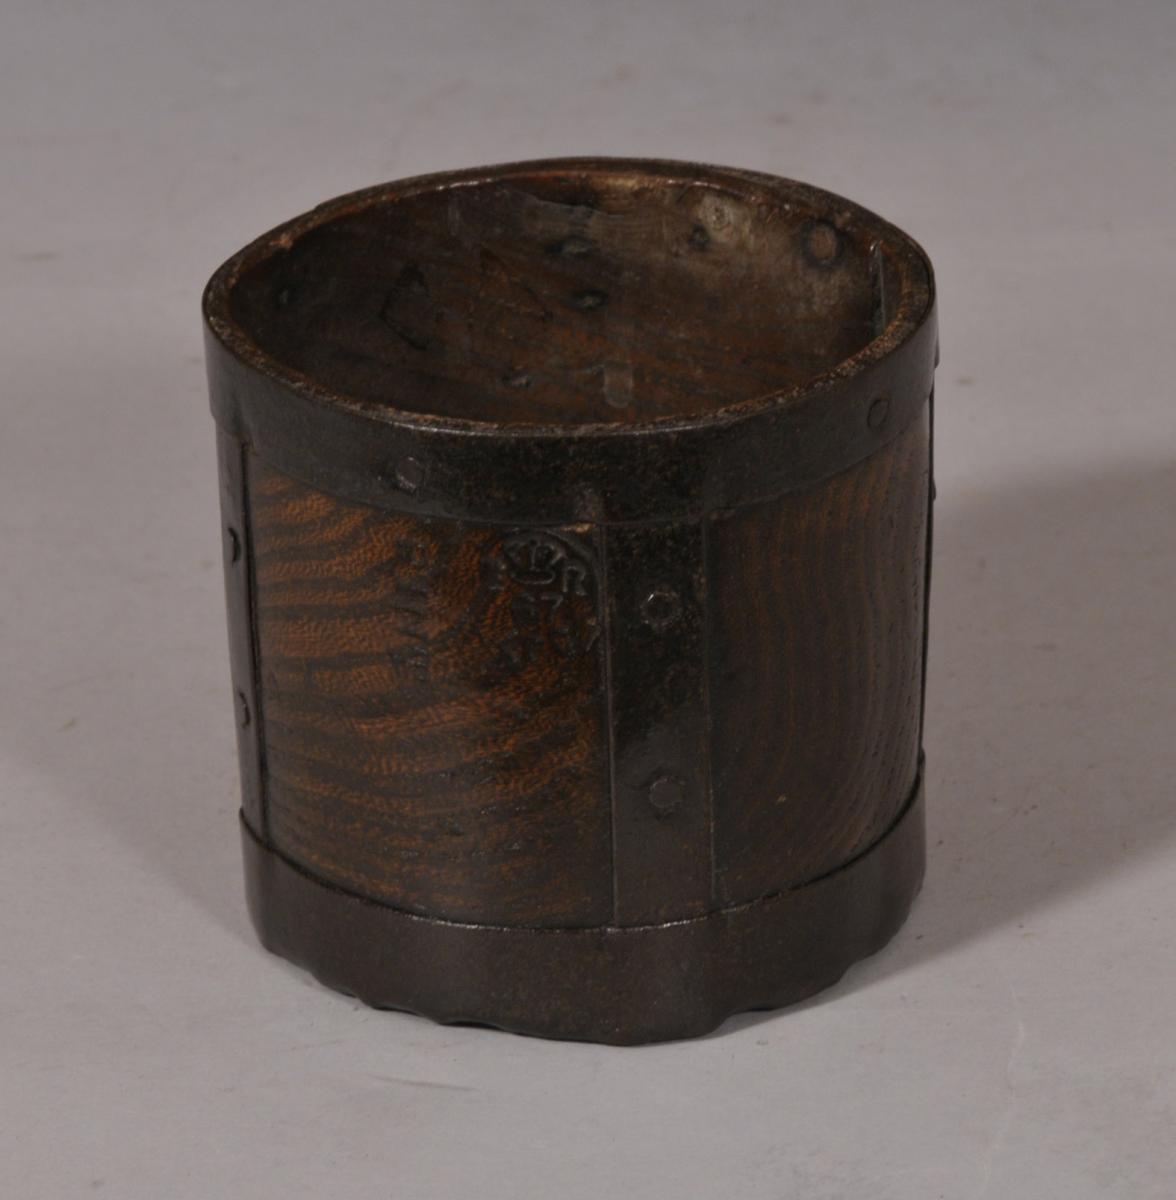 S/5103 Antique Treen Early 20th Century Ash Pint Grain or Flour Measure